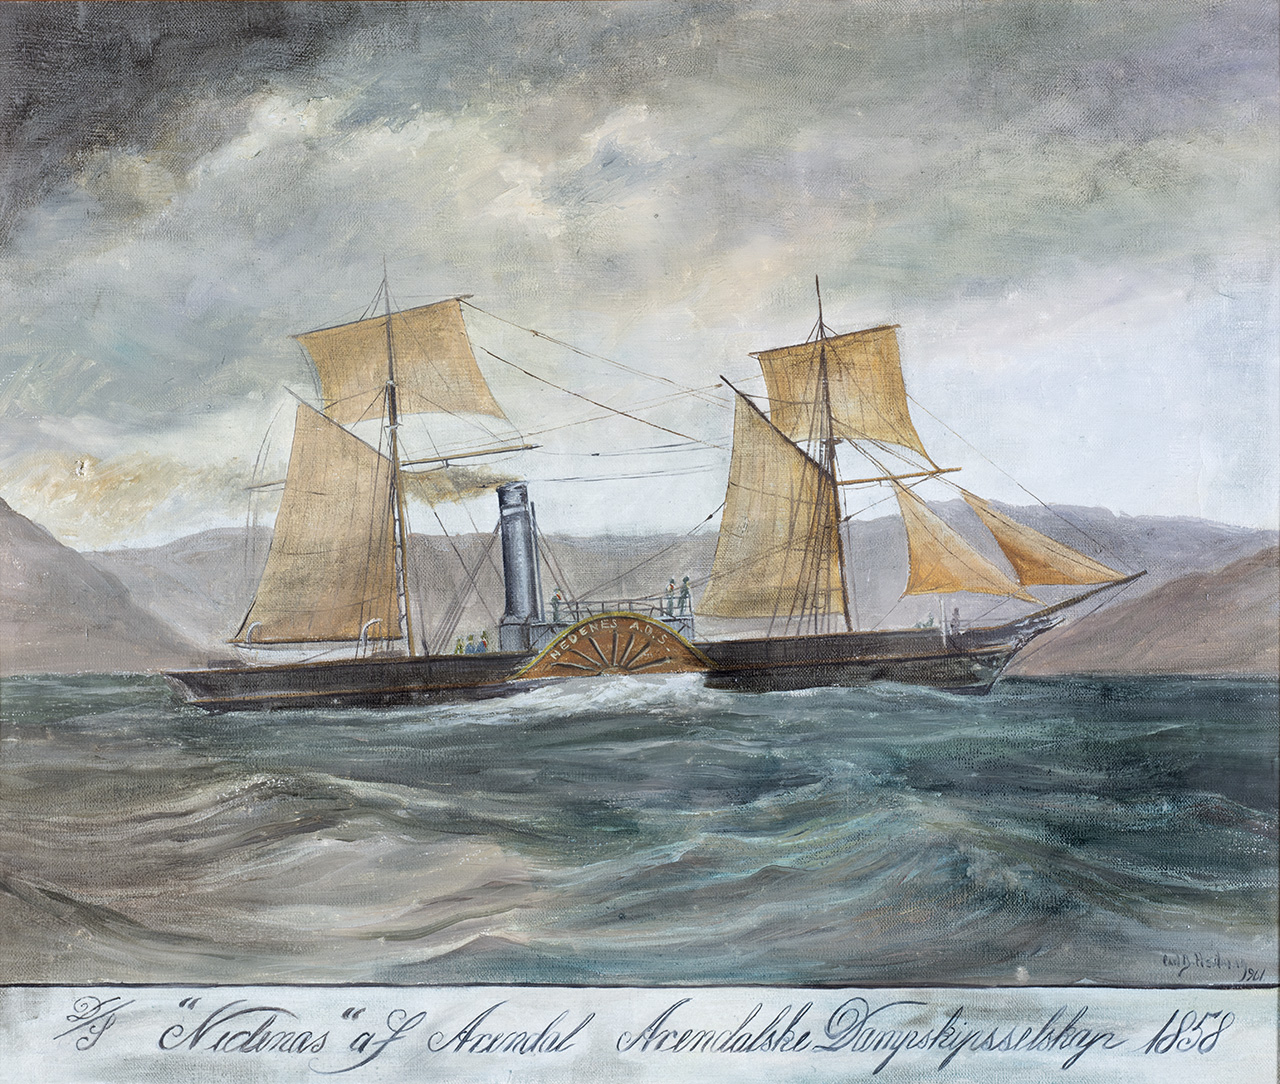 SS Nedenæs - the company's first vessel